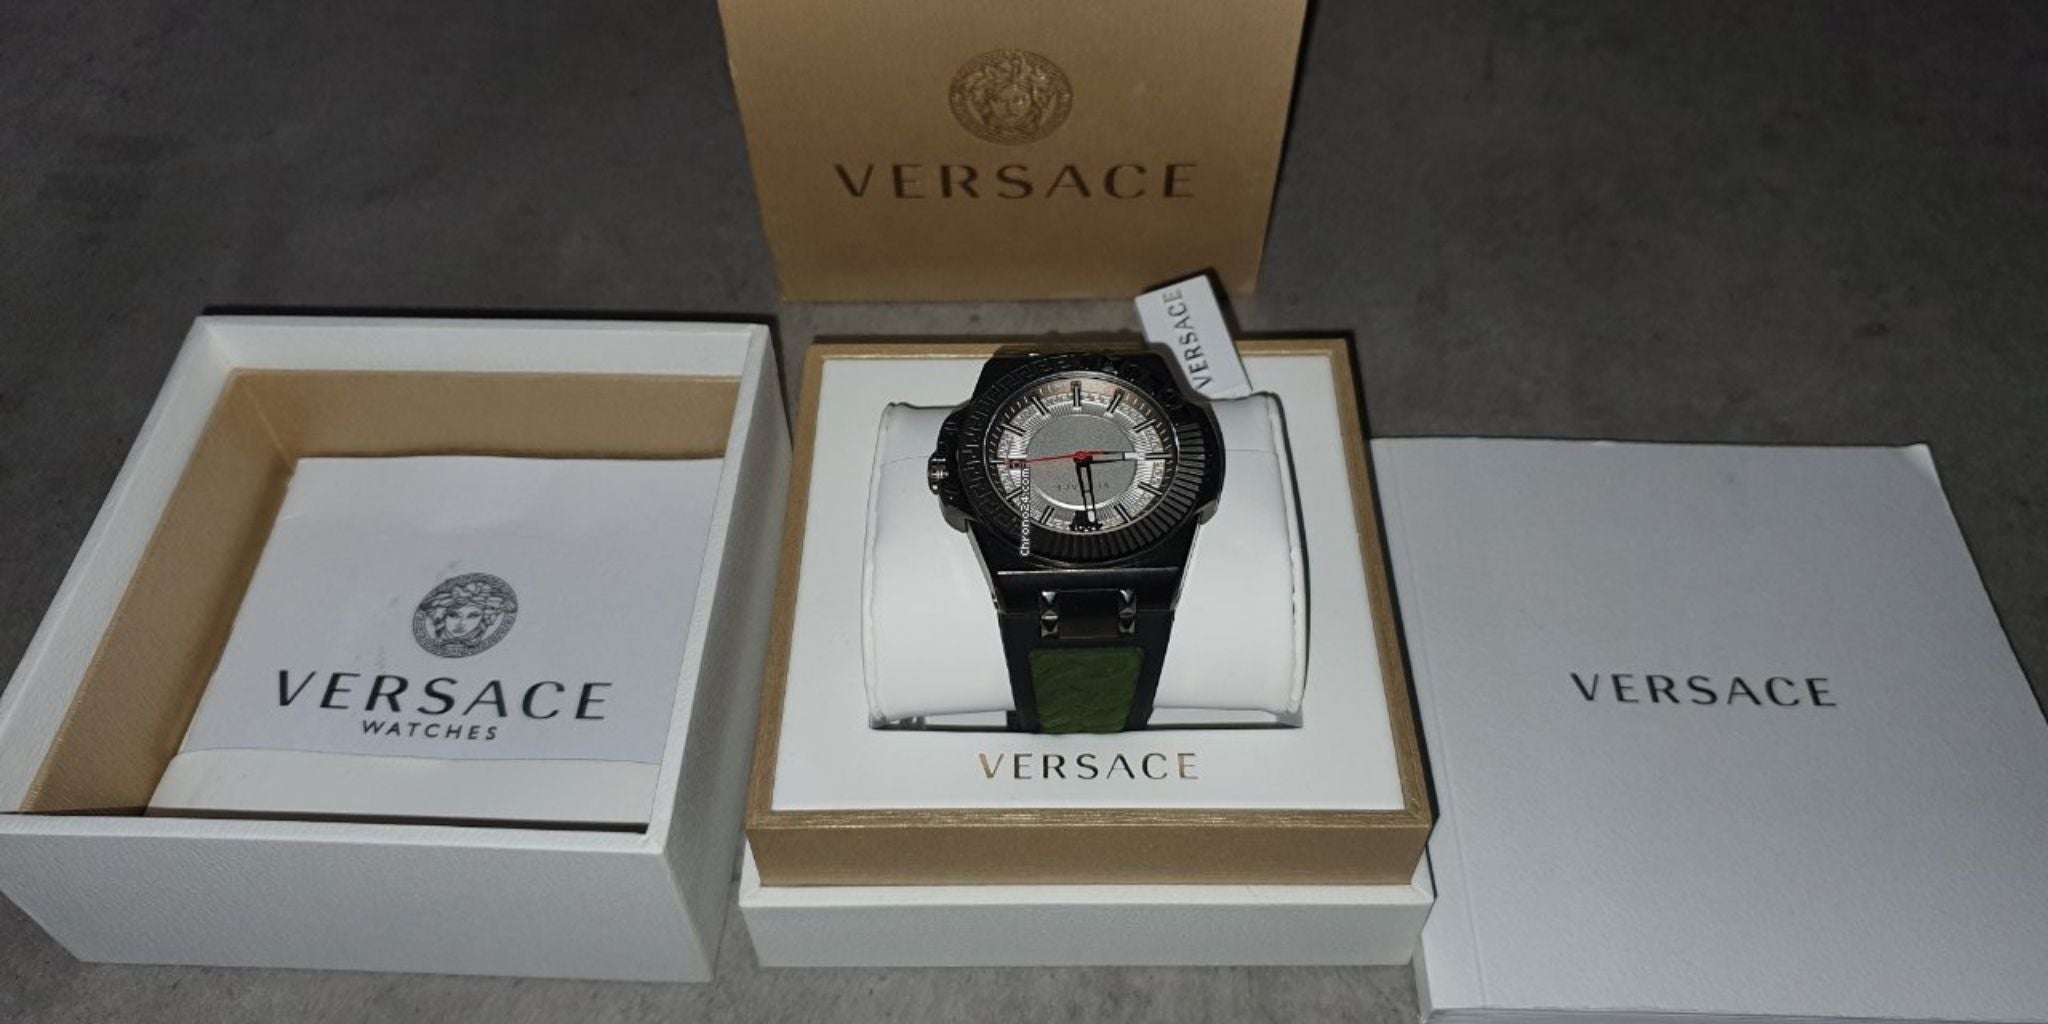 Versace watches